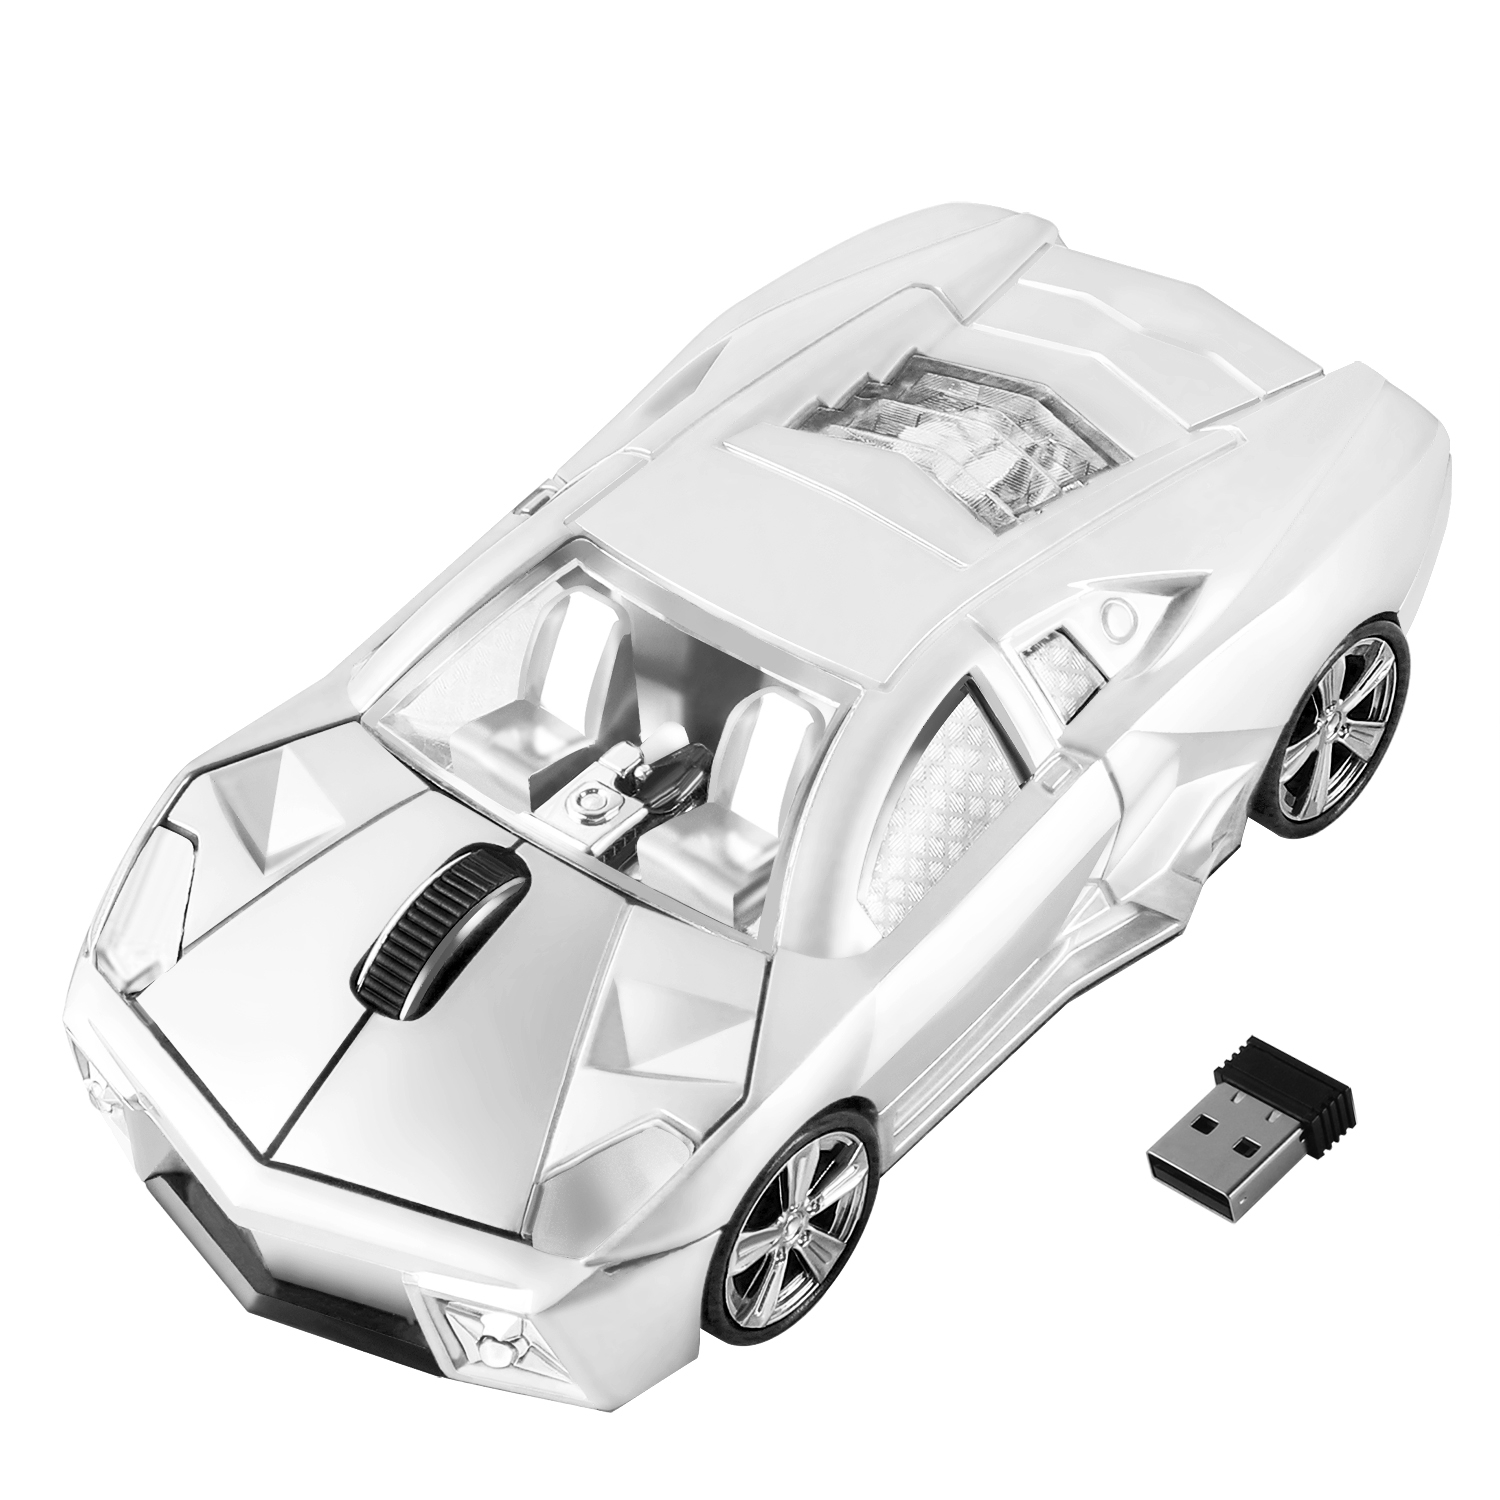 I-2-4G-Wireless-Mouse-Ergonomic-Sports-Car-Design-Gaming-Mause-1600-DPI-USB-Optical-Kids-Gift (10)